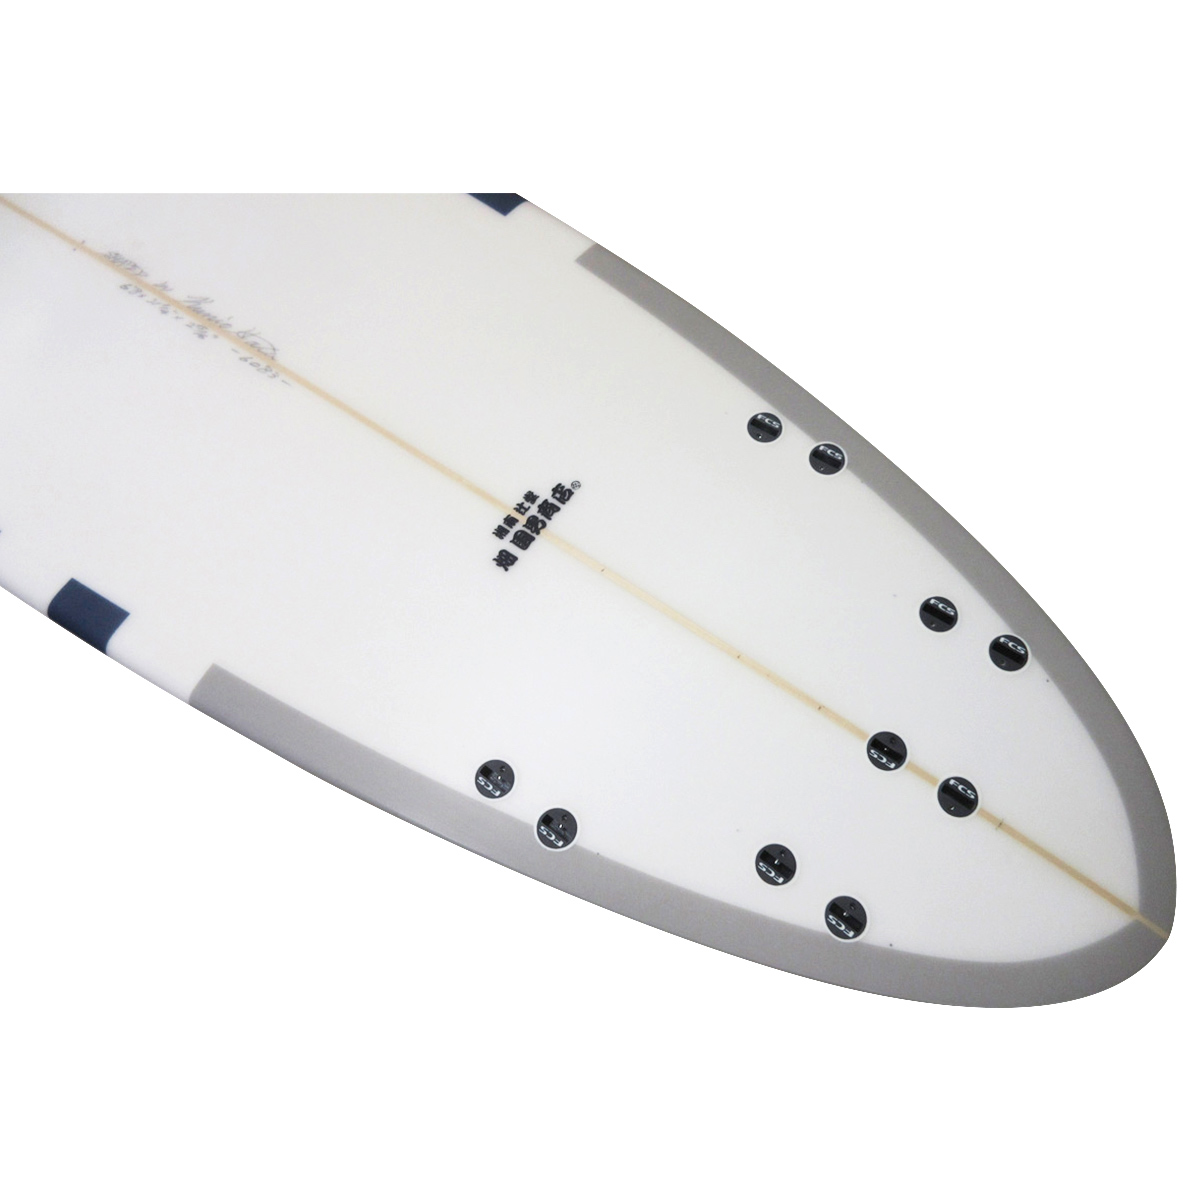 HATA SURFBOARDS / Custom Round Pin 6`8